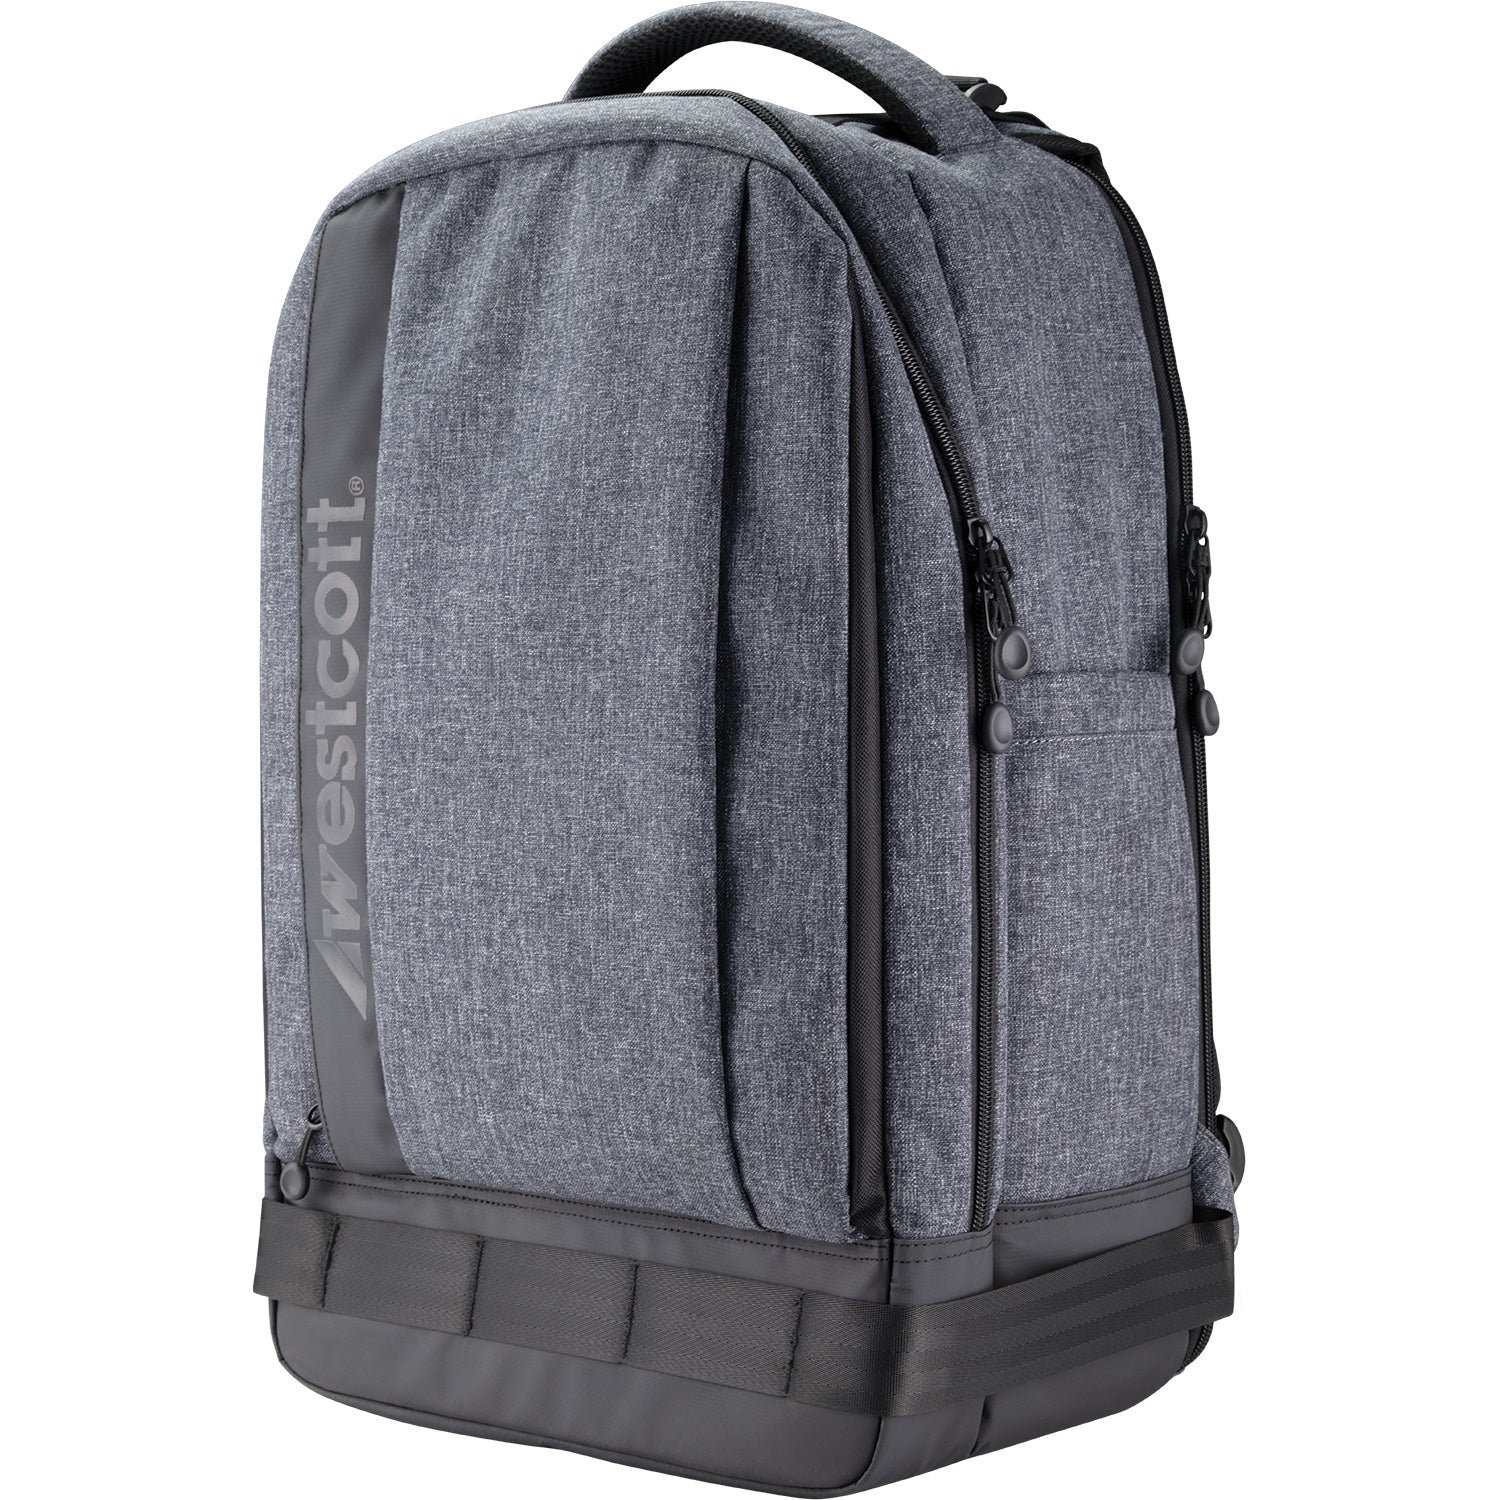 Apollo Backpack cloth bag